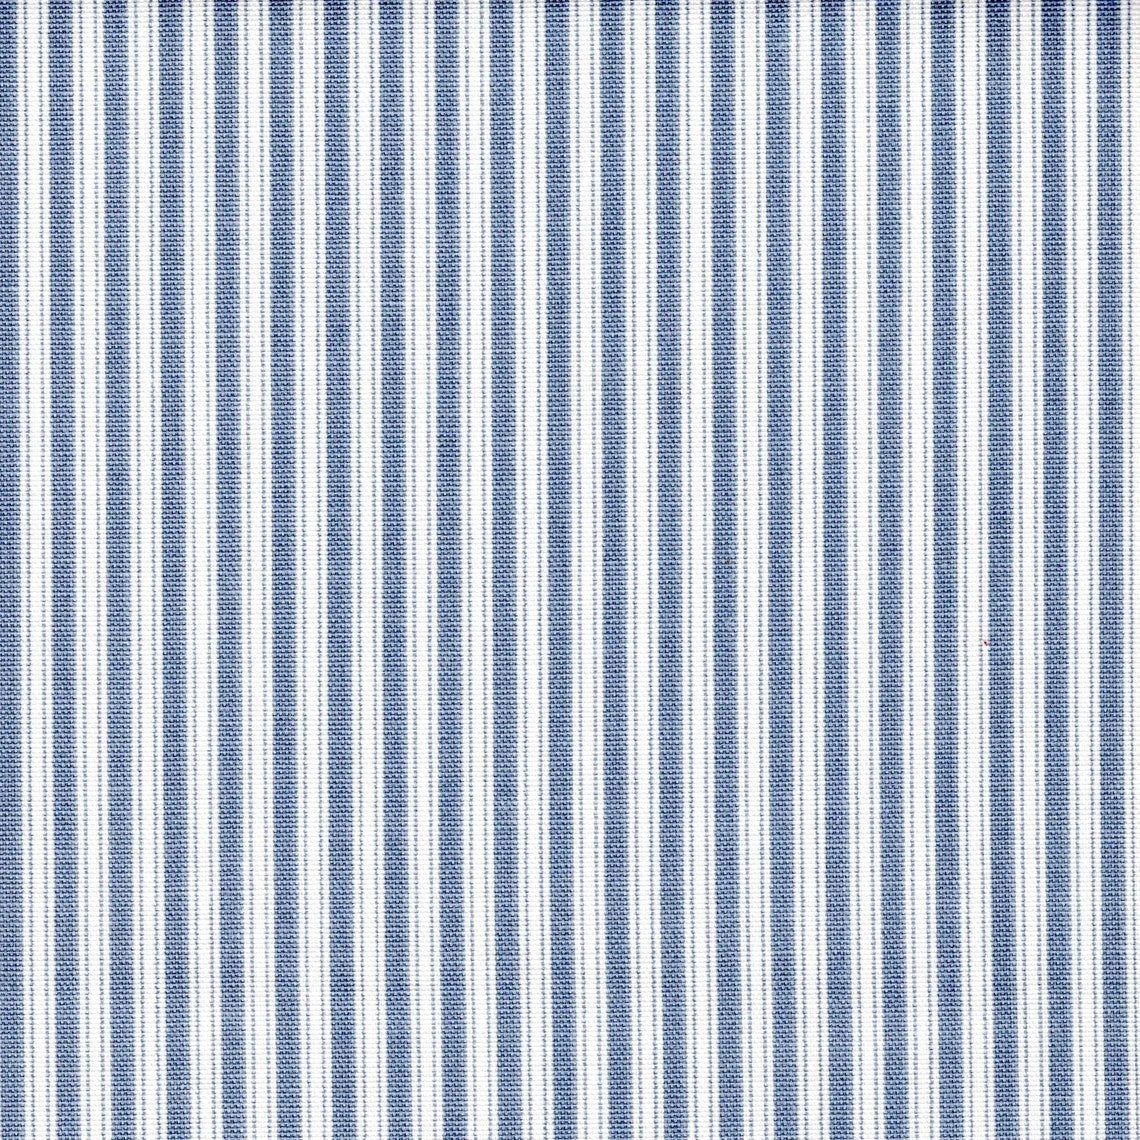 tailored crib skirt in polo sail blue stripe on white